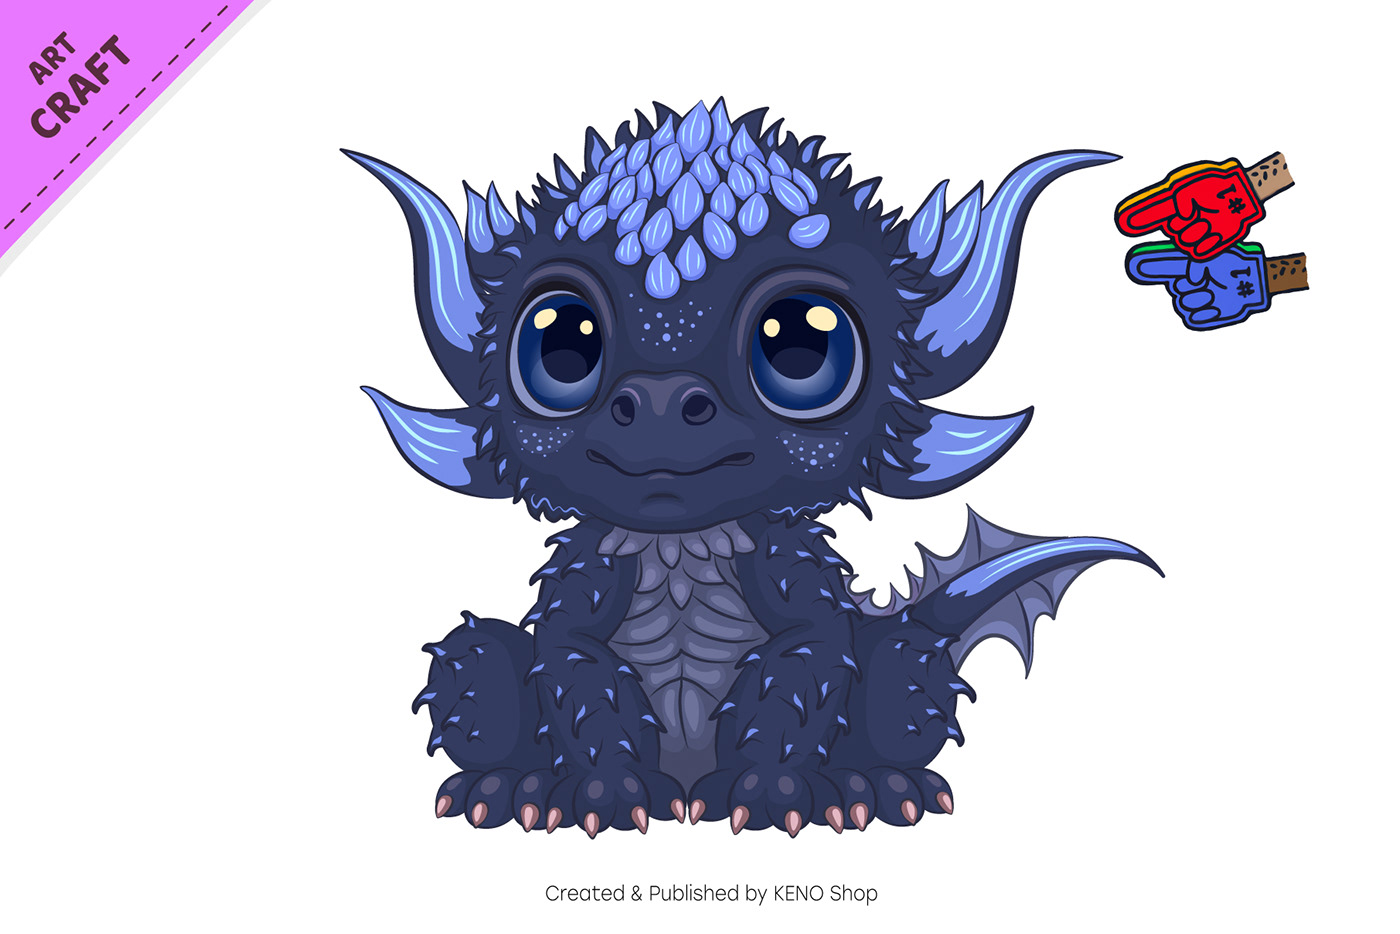 Cute cartoon illustration of sitting Spiky baby dragon. Unique design, fantasy mascot.